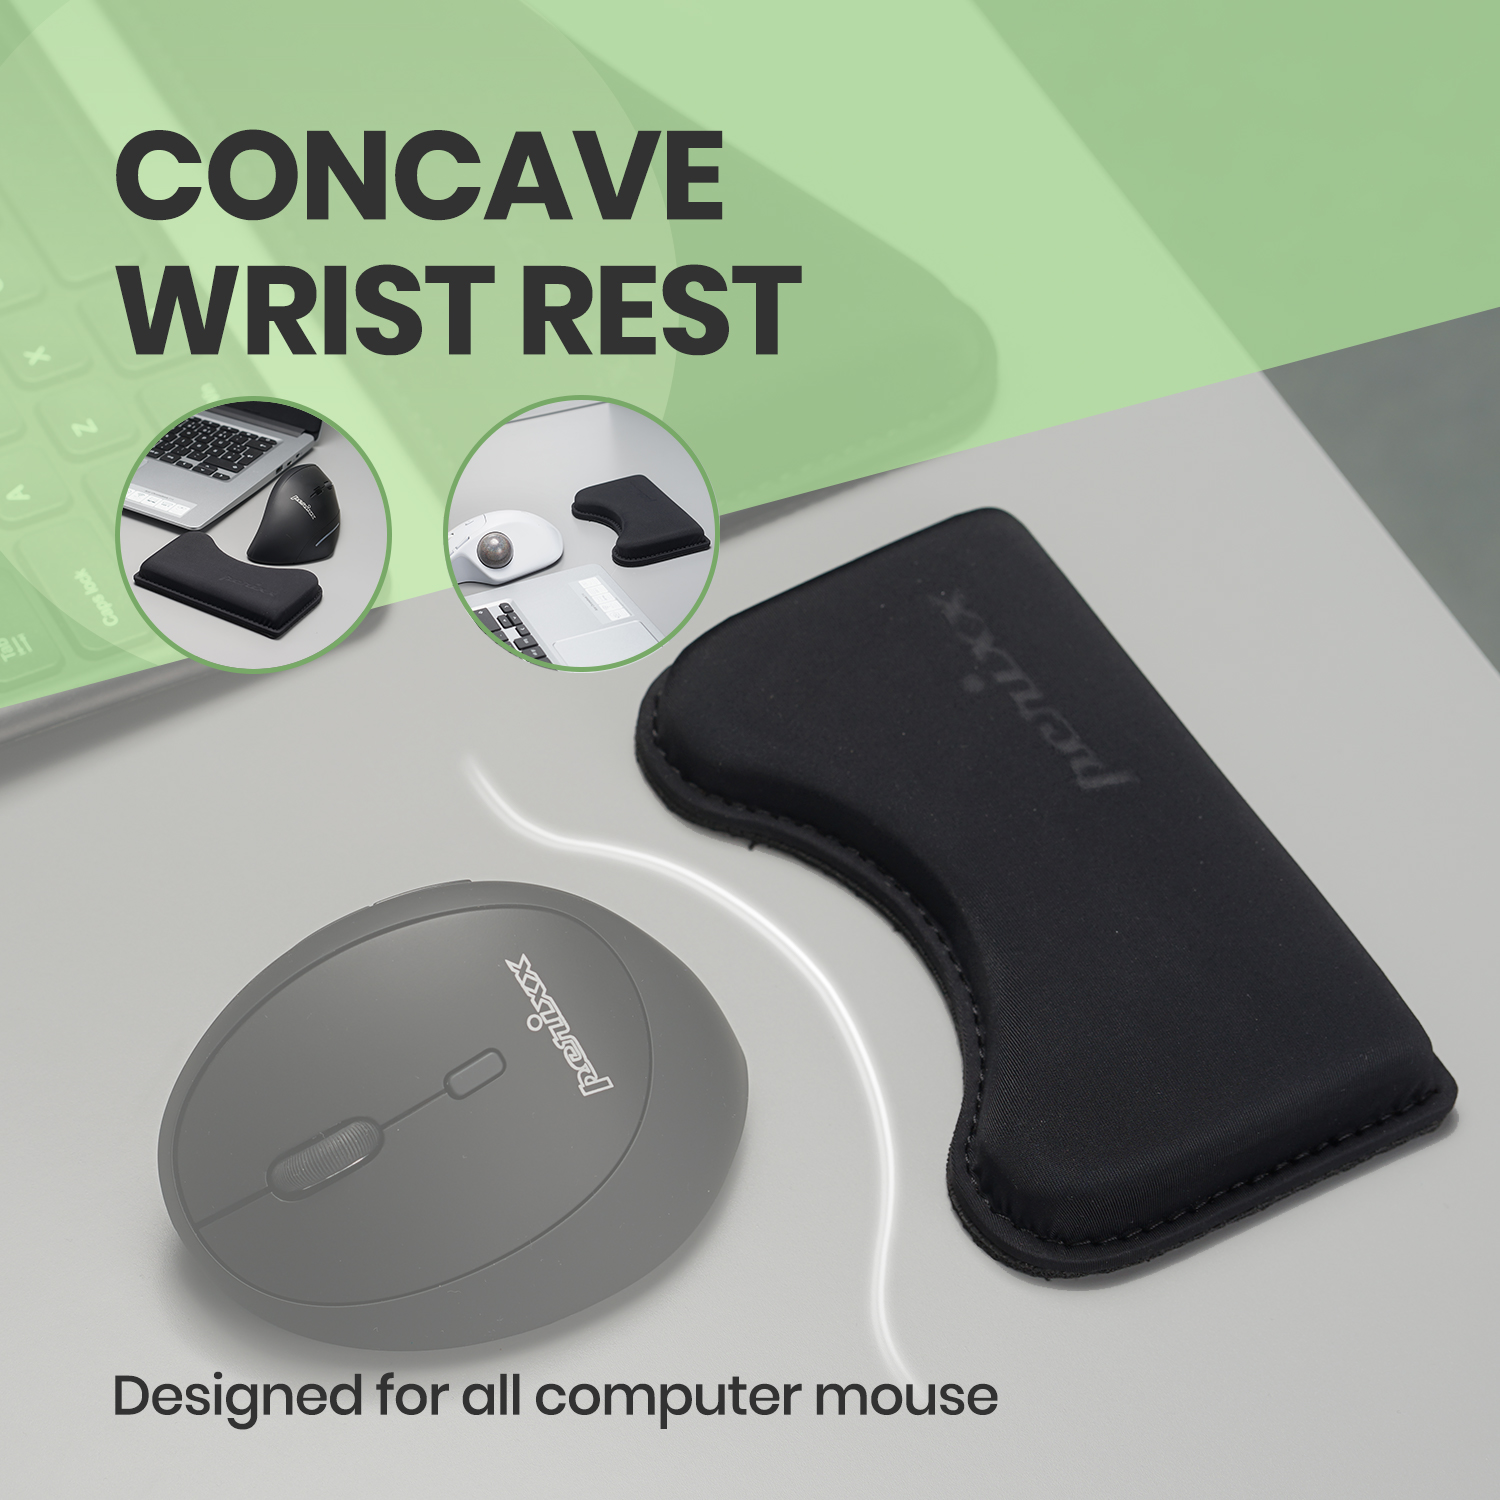 Mouse Wrist Rest with Concave Design